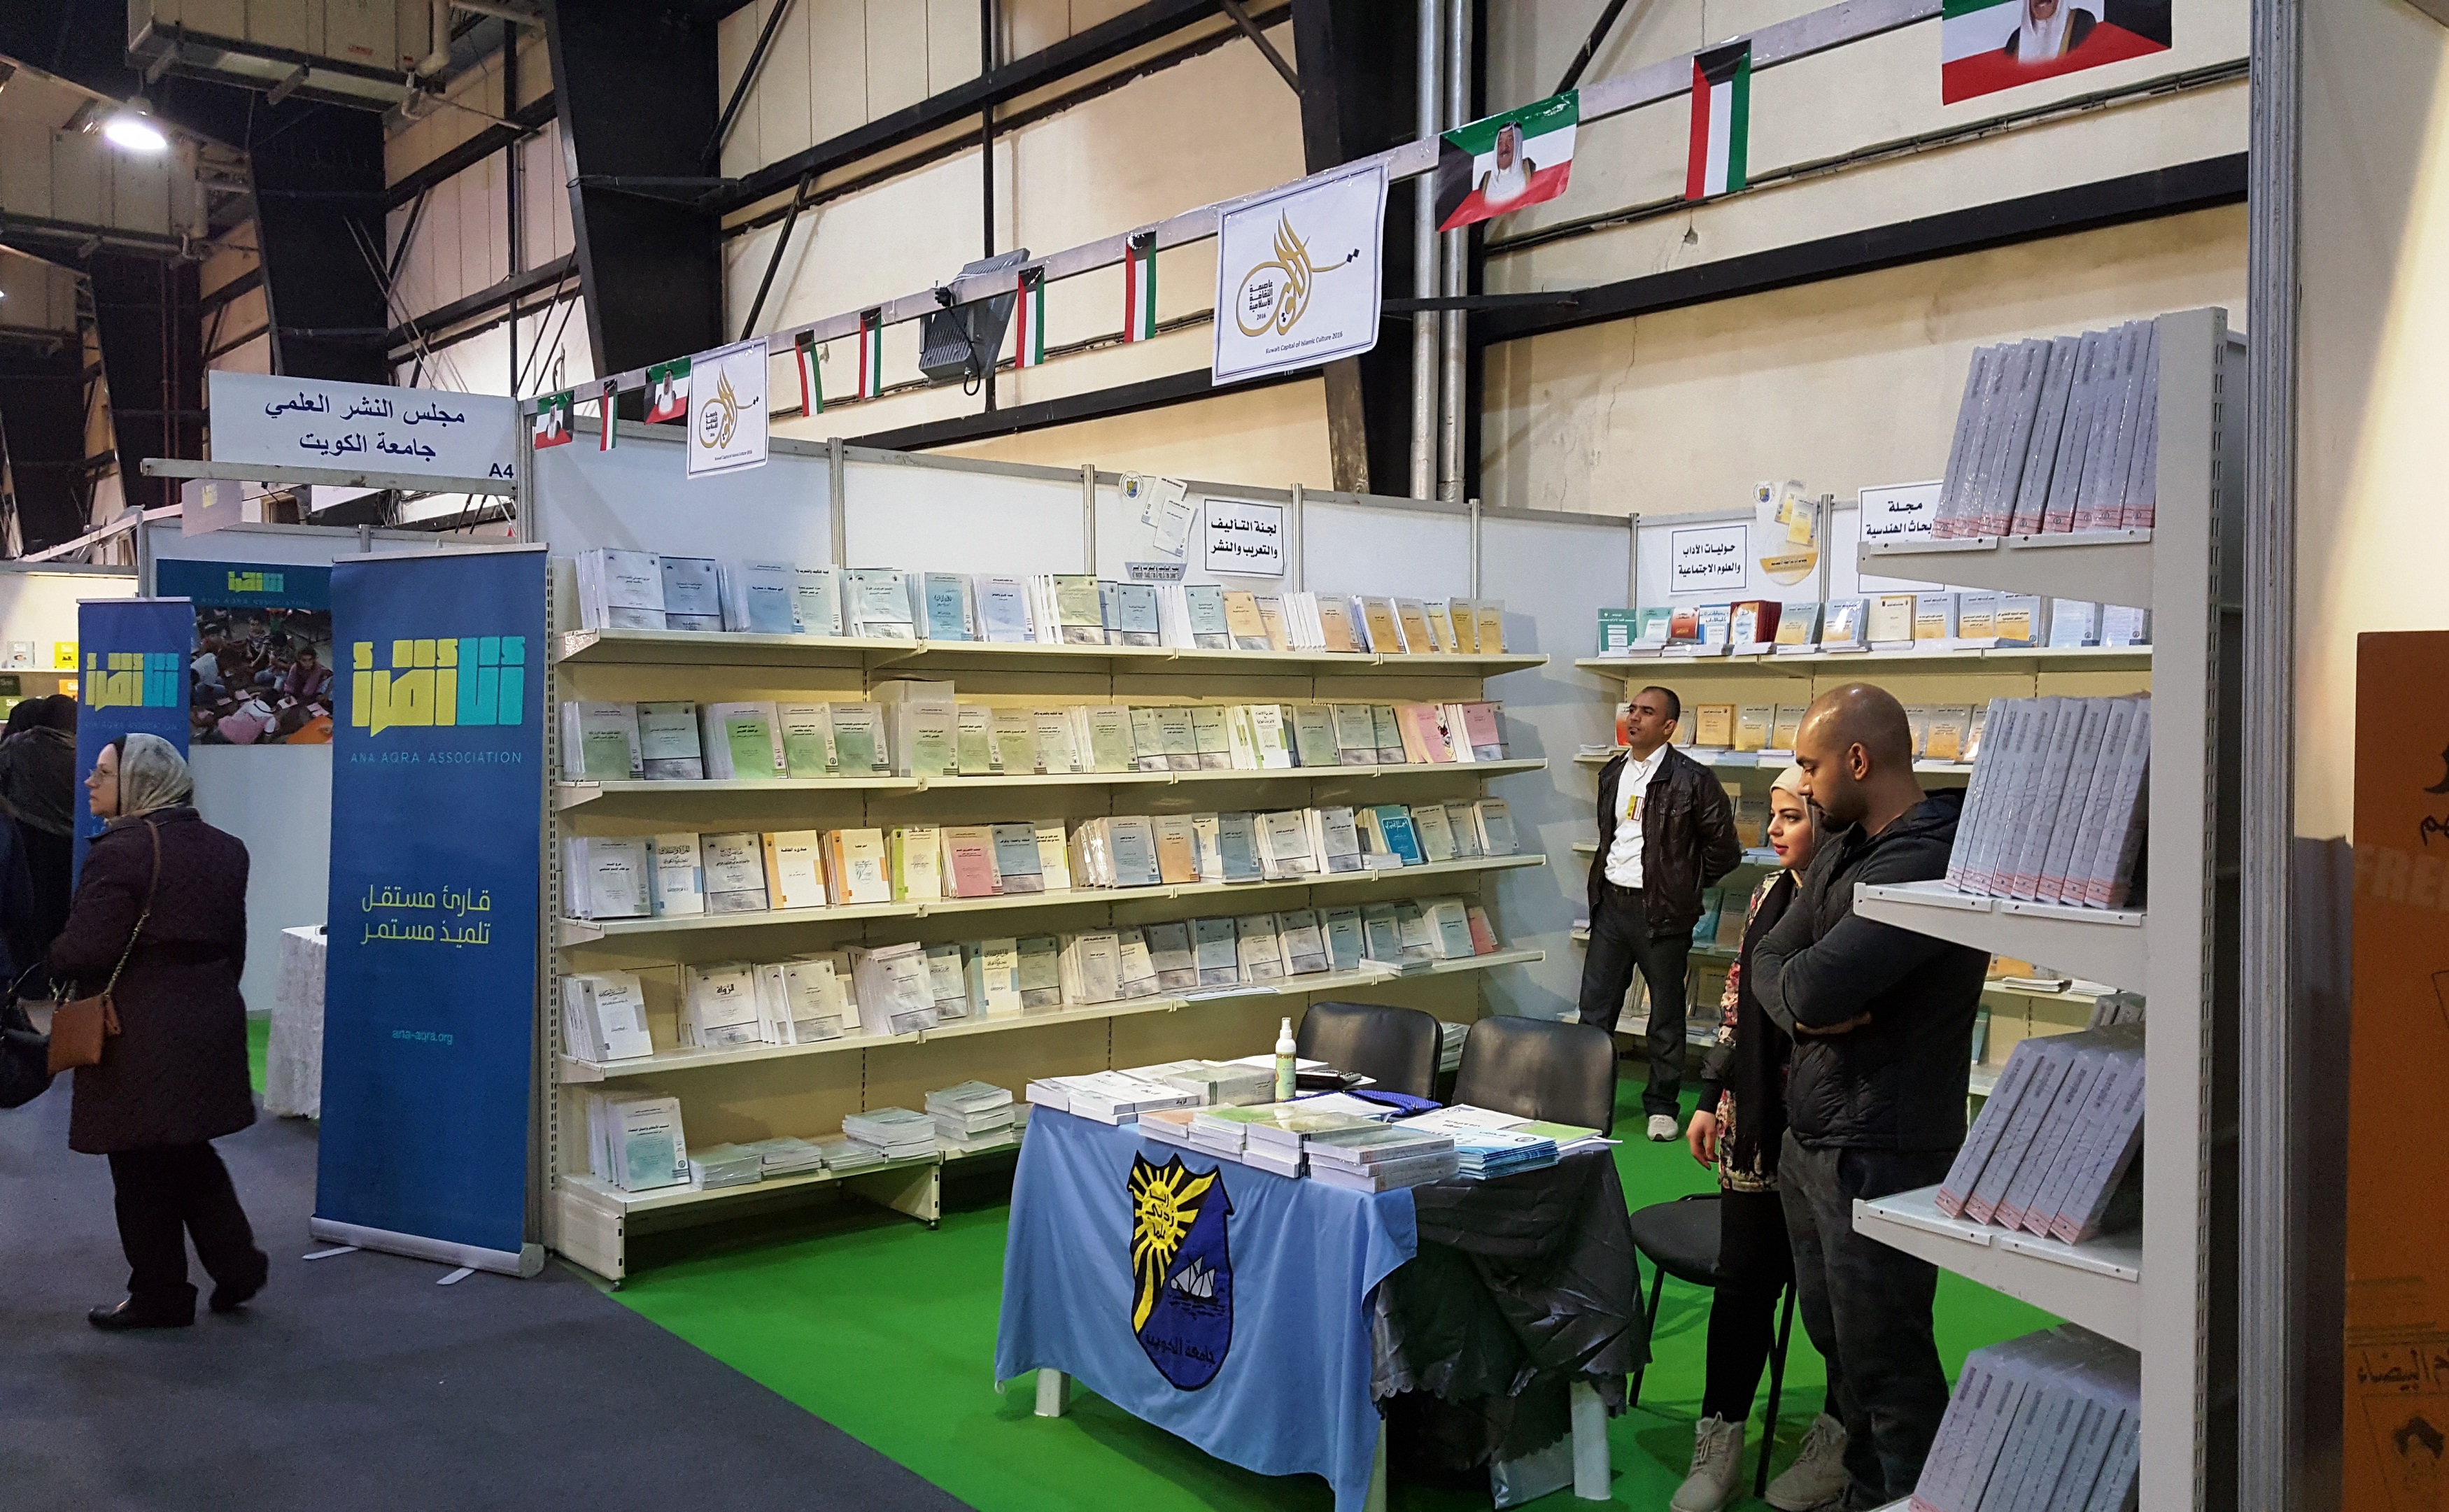 Kuwait's pavilion in Beirut's book fair